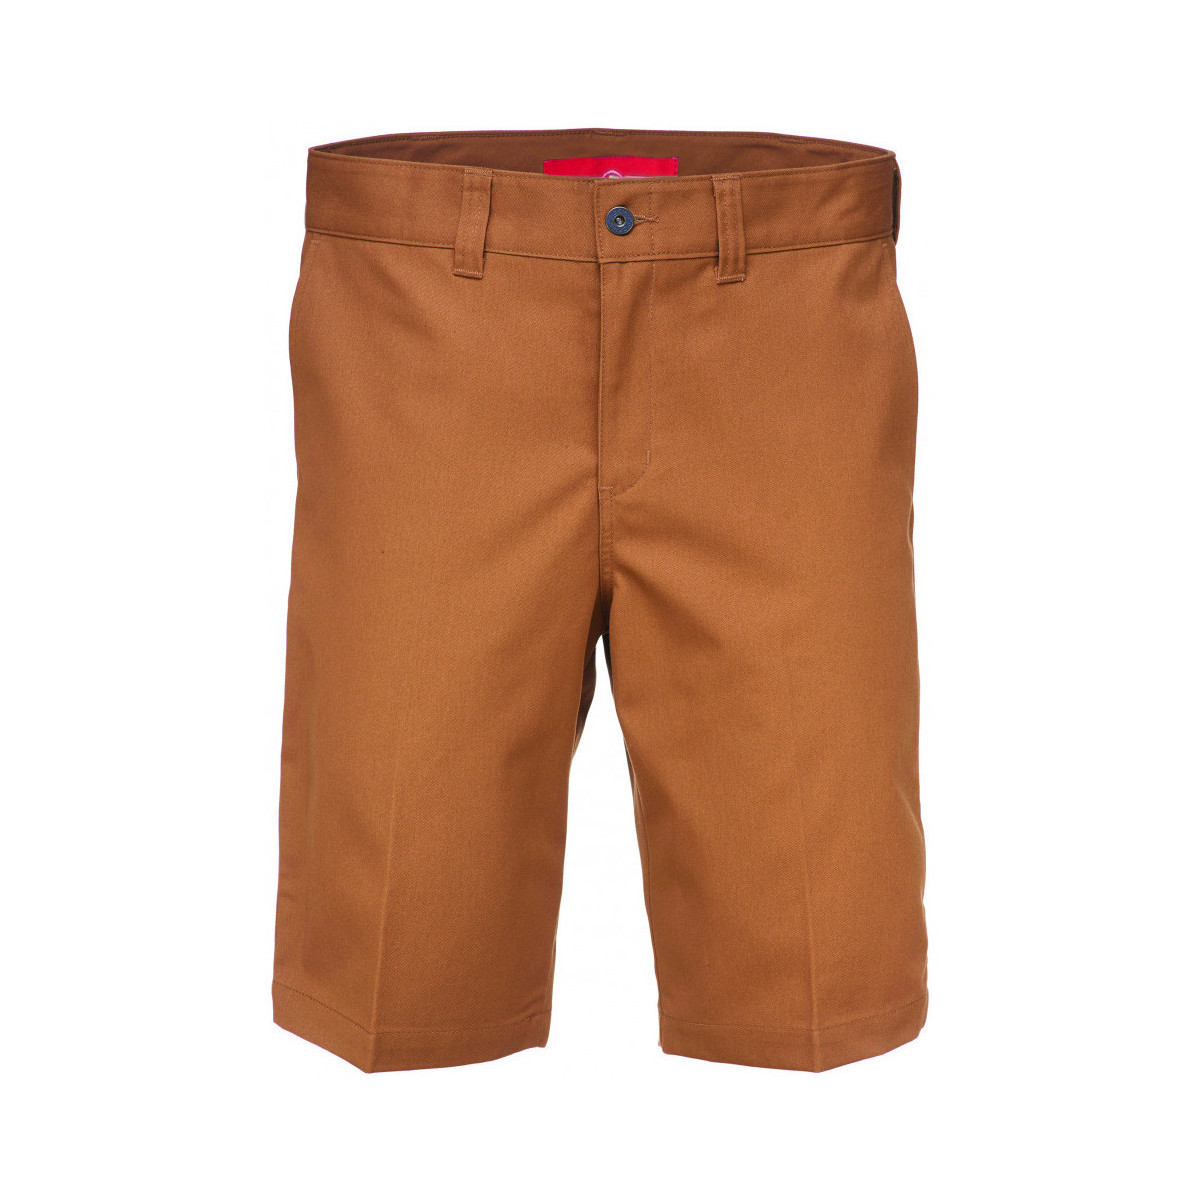 textil Hombre Shorts / Bermudas Dickies Industrial wk sht Marrón